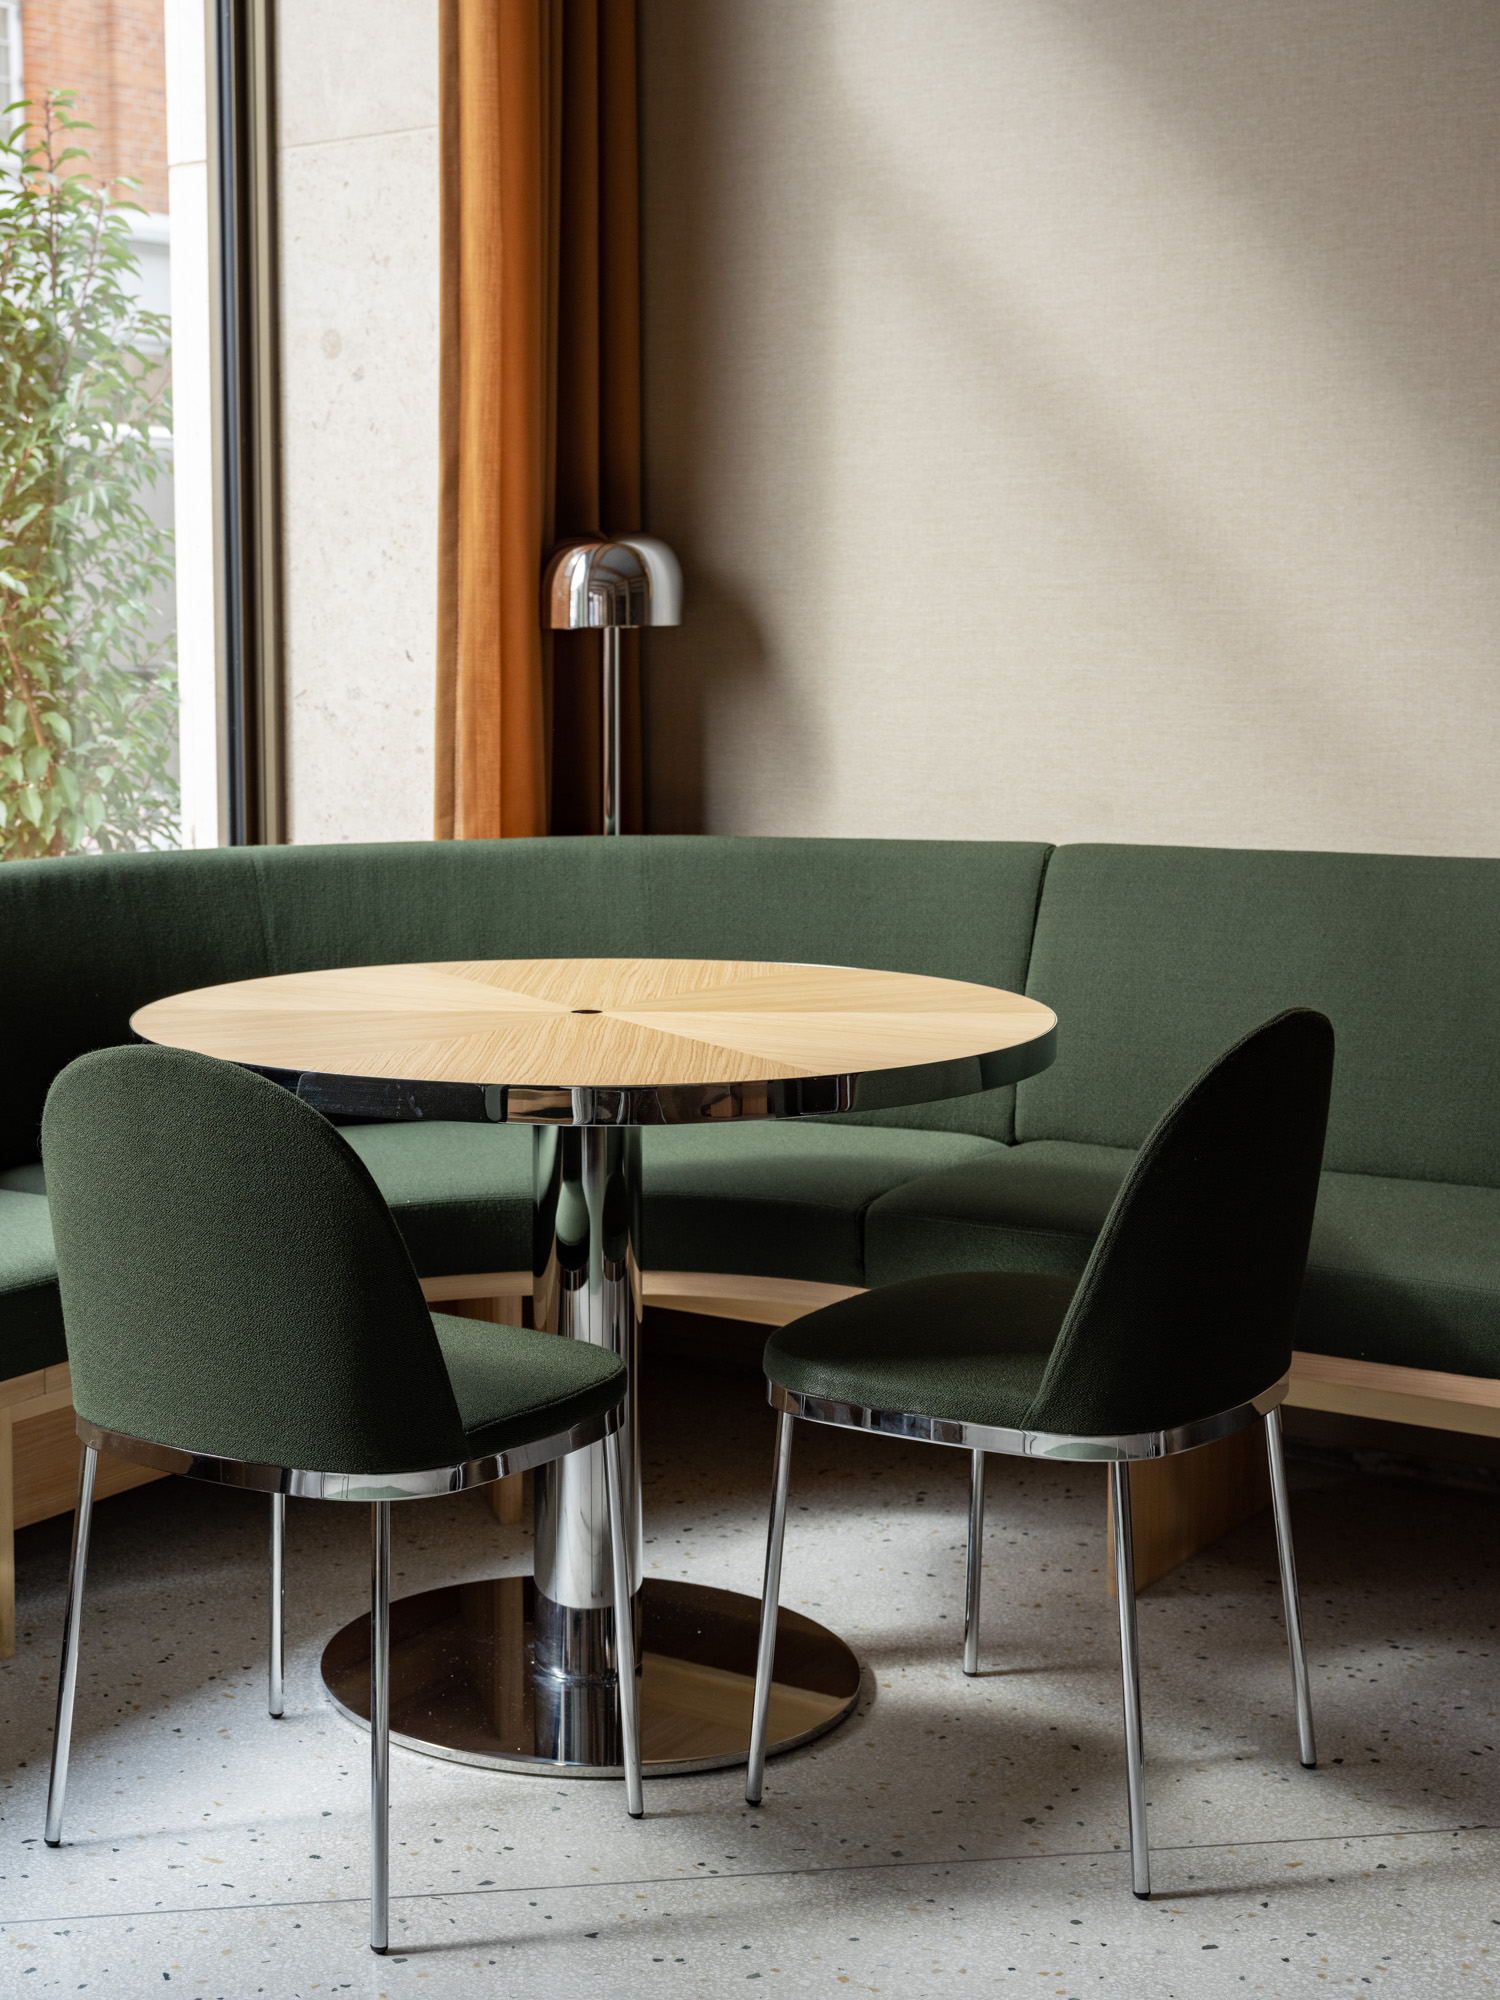 Levi Copenhagen restaurant Johannes Torpe Studios interior design green chairs